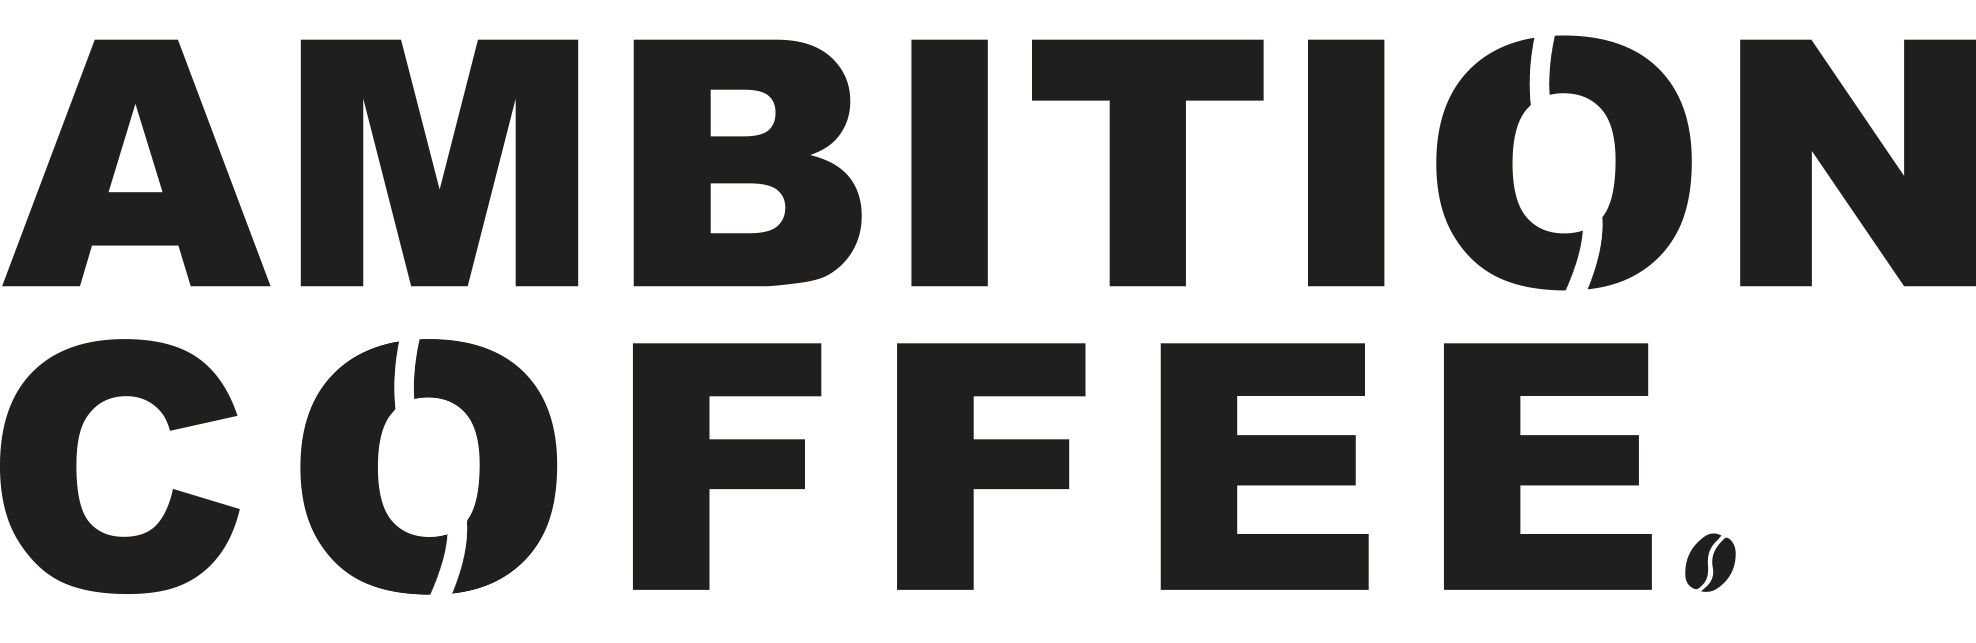 Joshua Lybolt | Ambition Coffee Logo